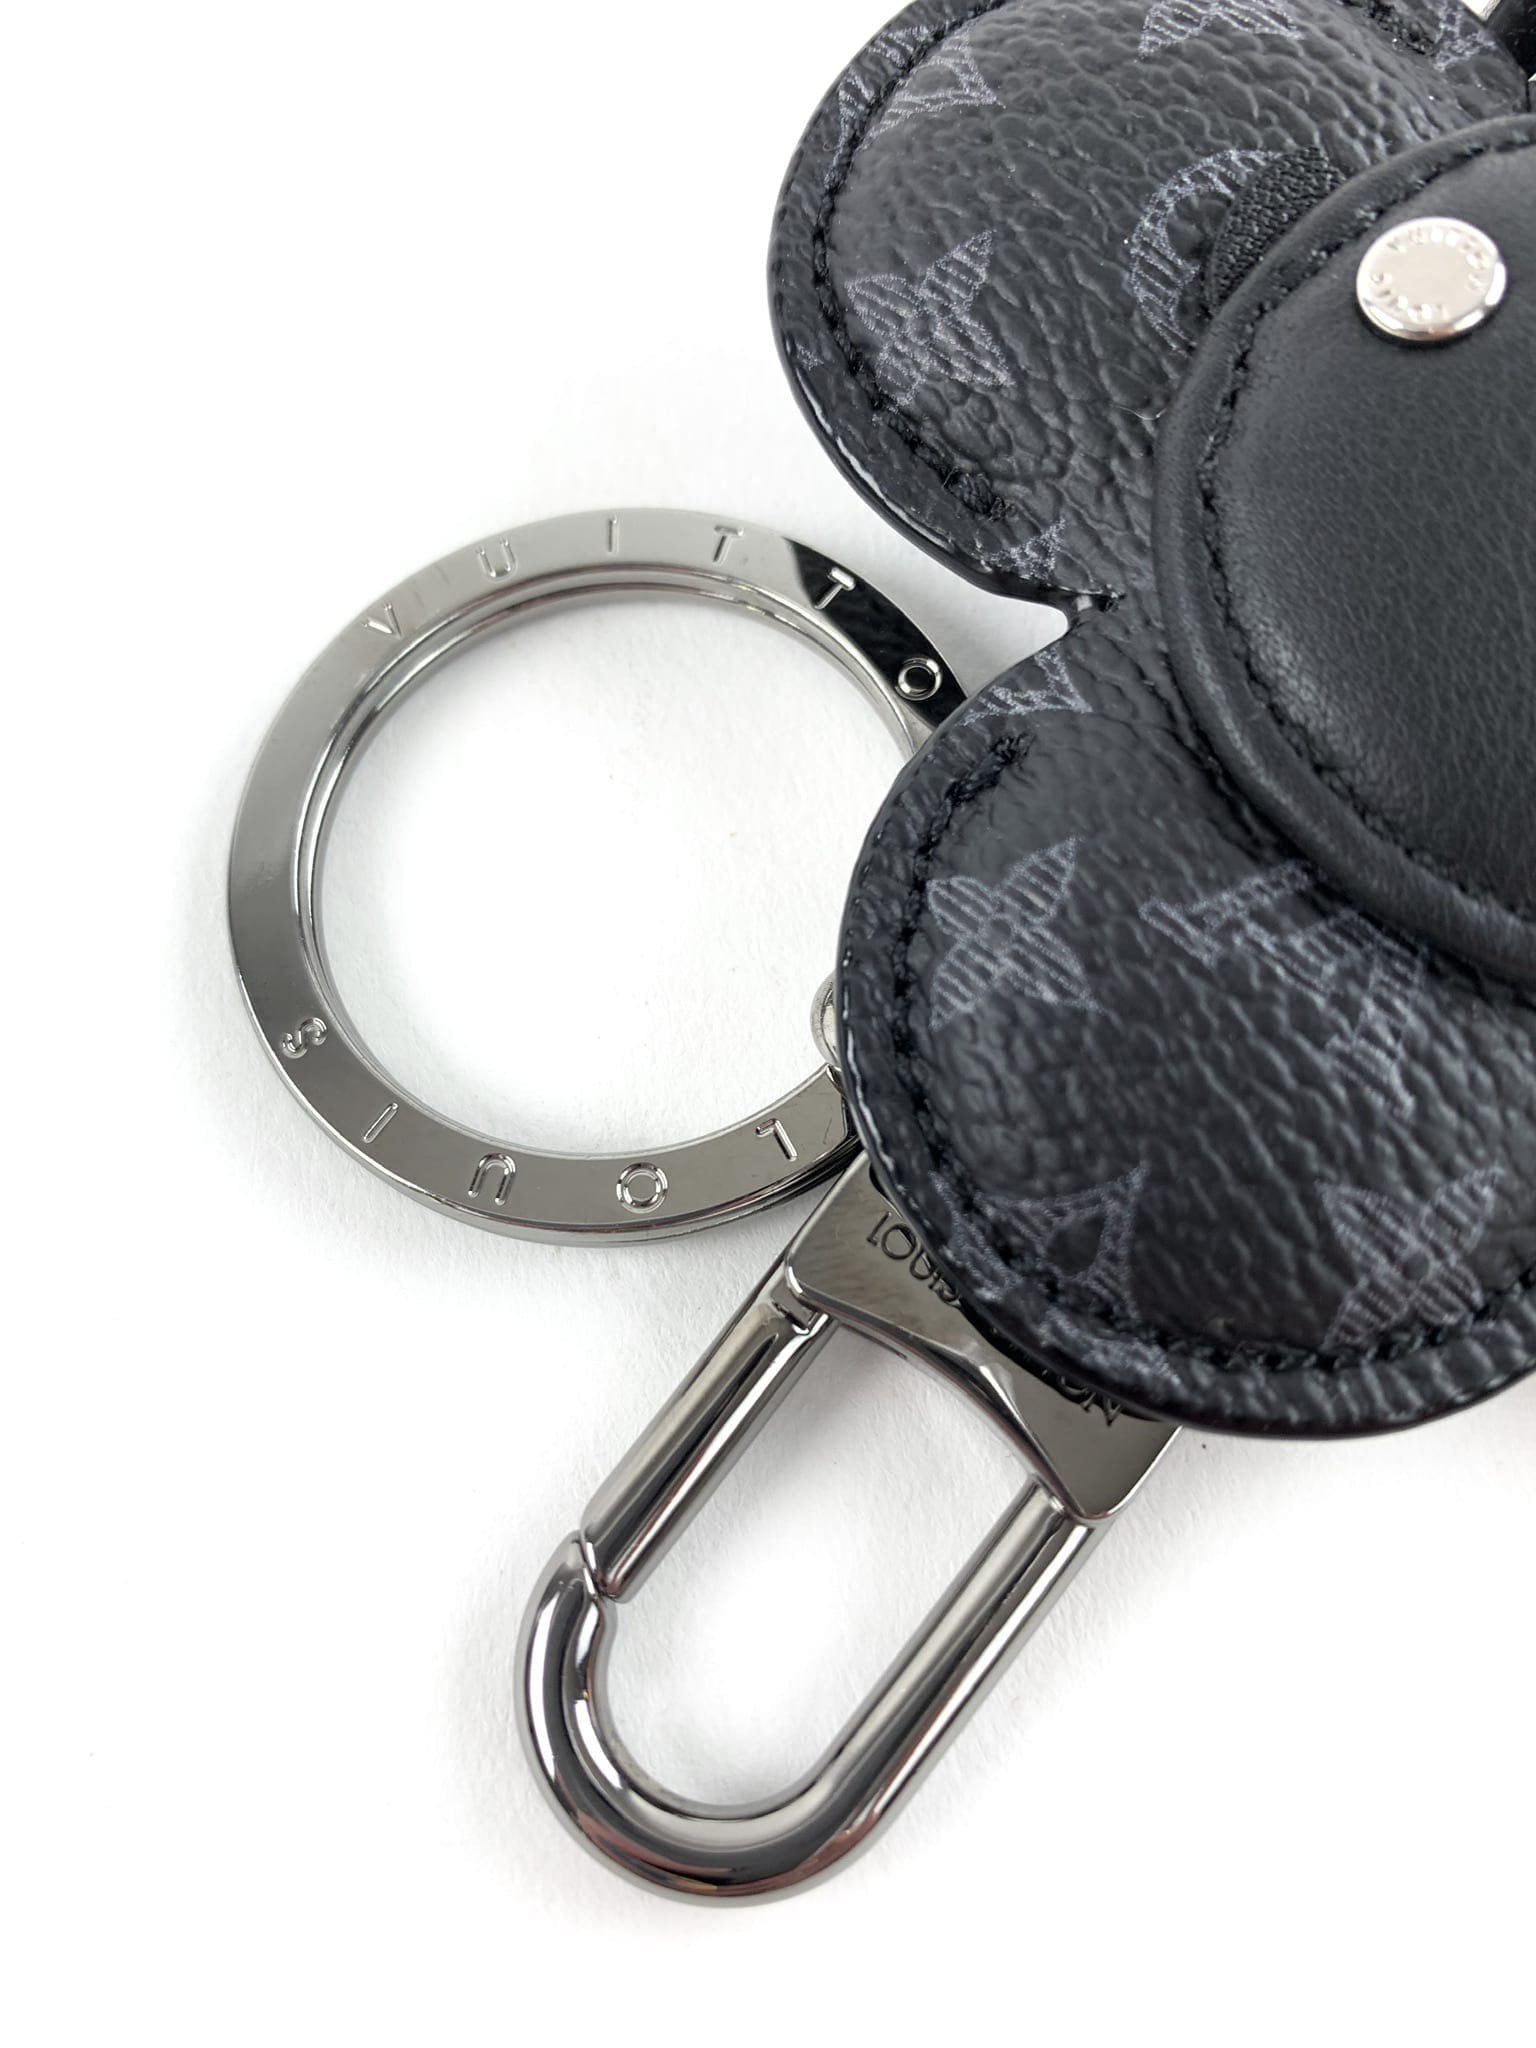 Louis Vuitton LV Silver Bag Charm Keychain at 1stDibs